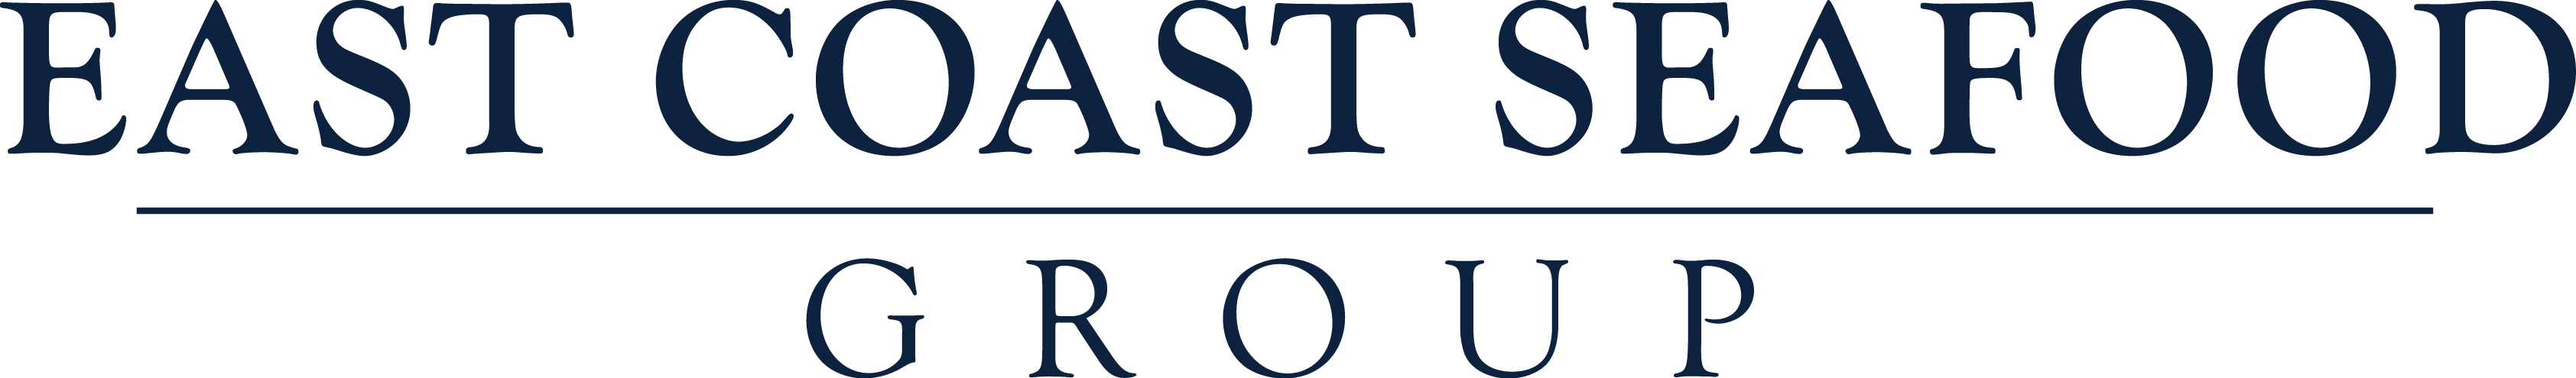 East Coast Seafood Group Logo Navy